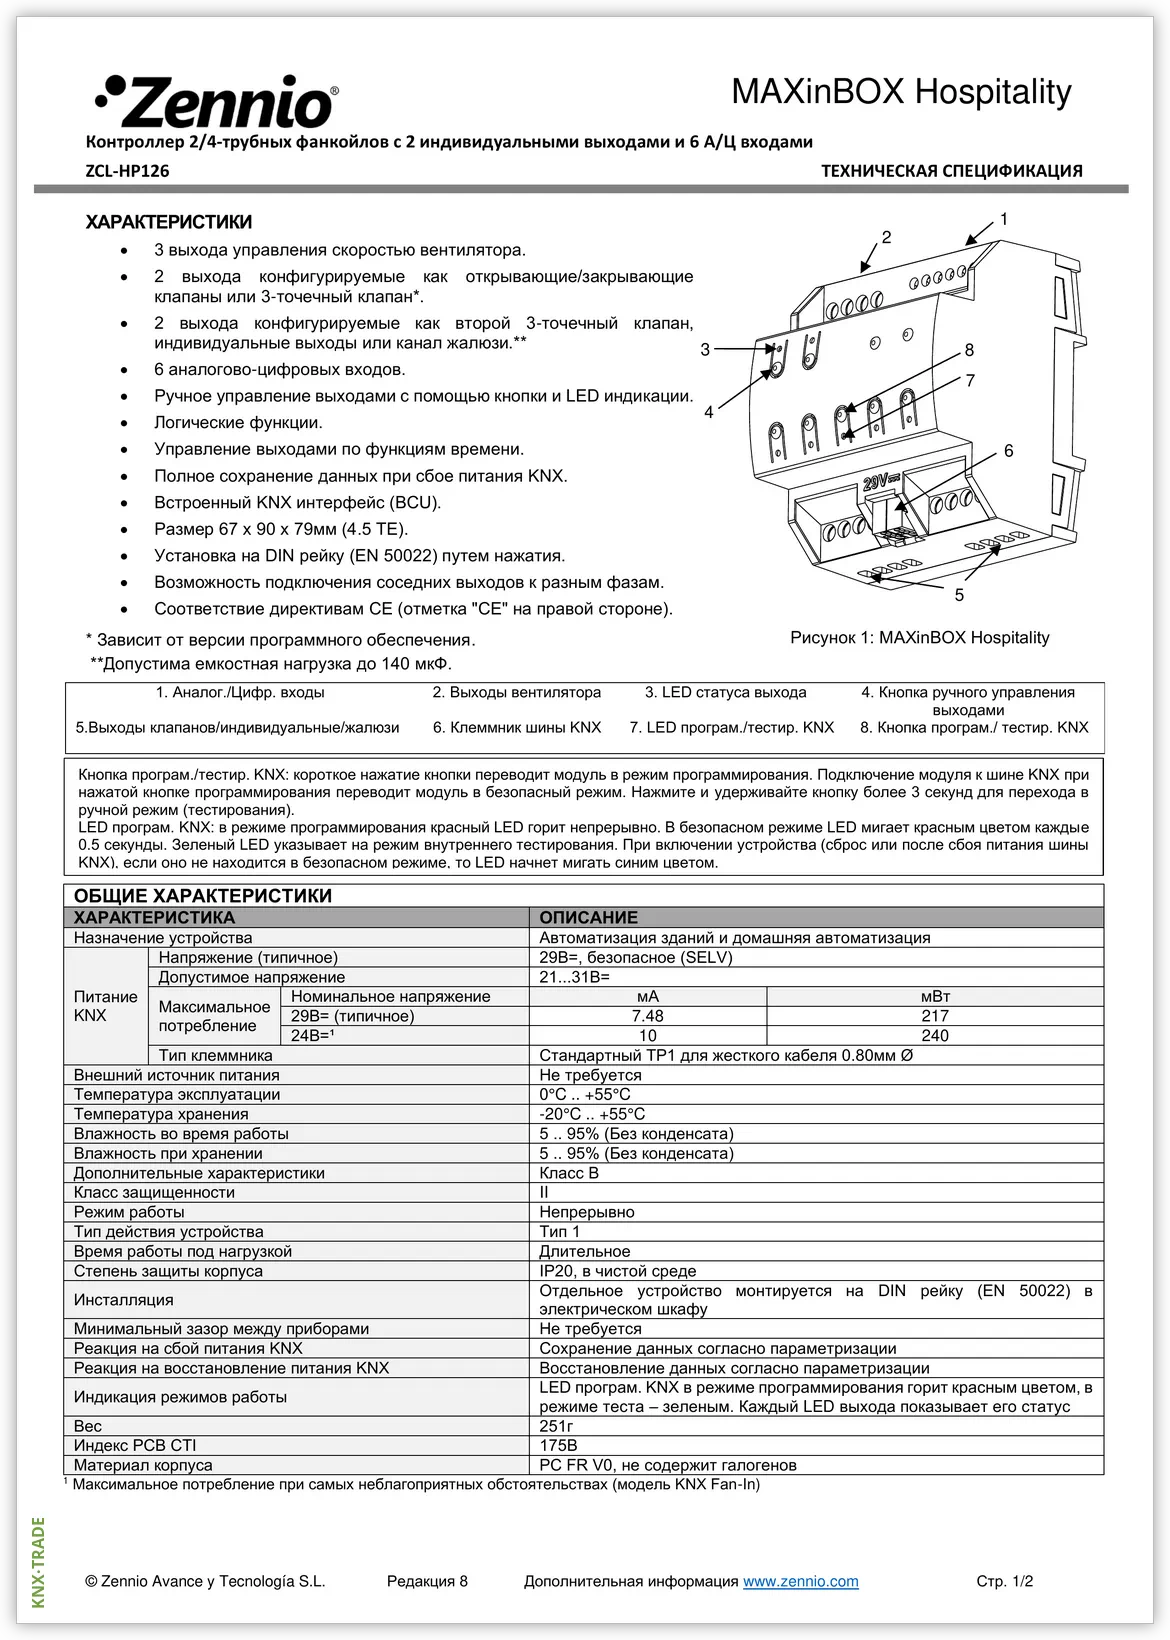 Datasheet (1) Zennio [ZCL-HP126] MAXinBOX Hospitality / Контроллер KNX для 2/4-х трубных фанкойлов